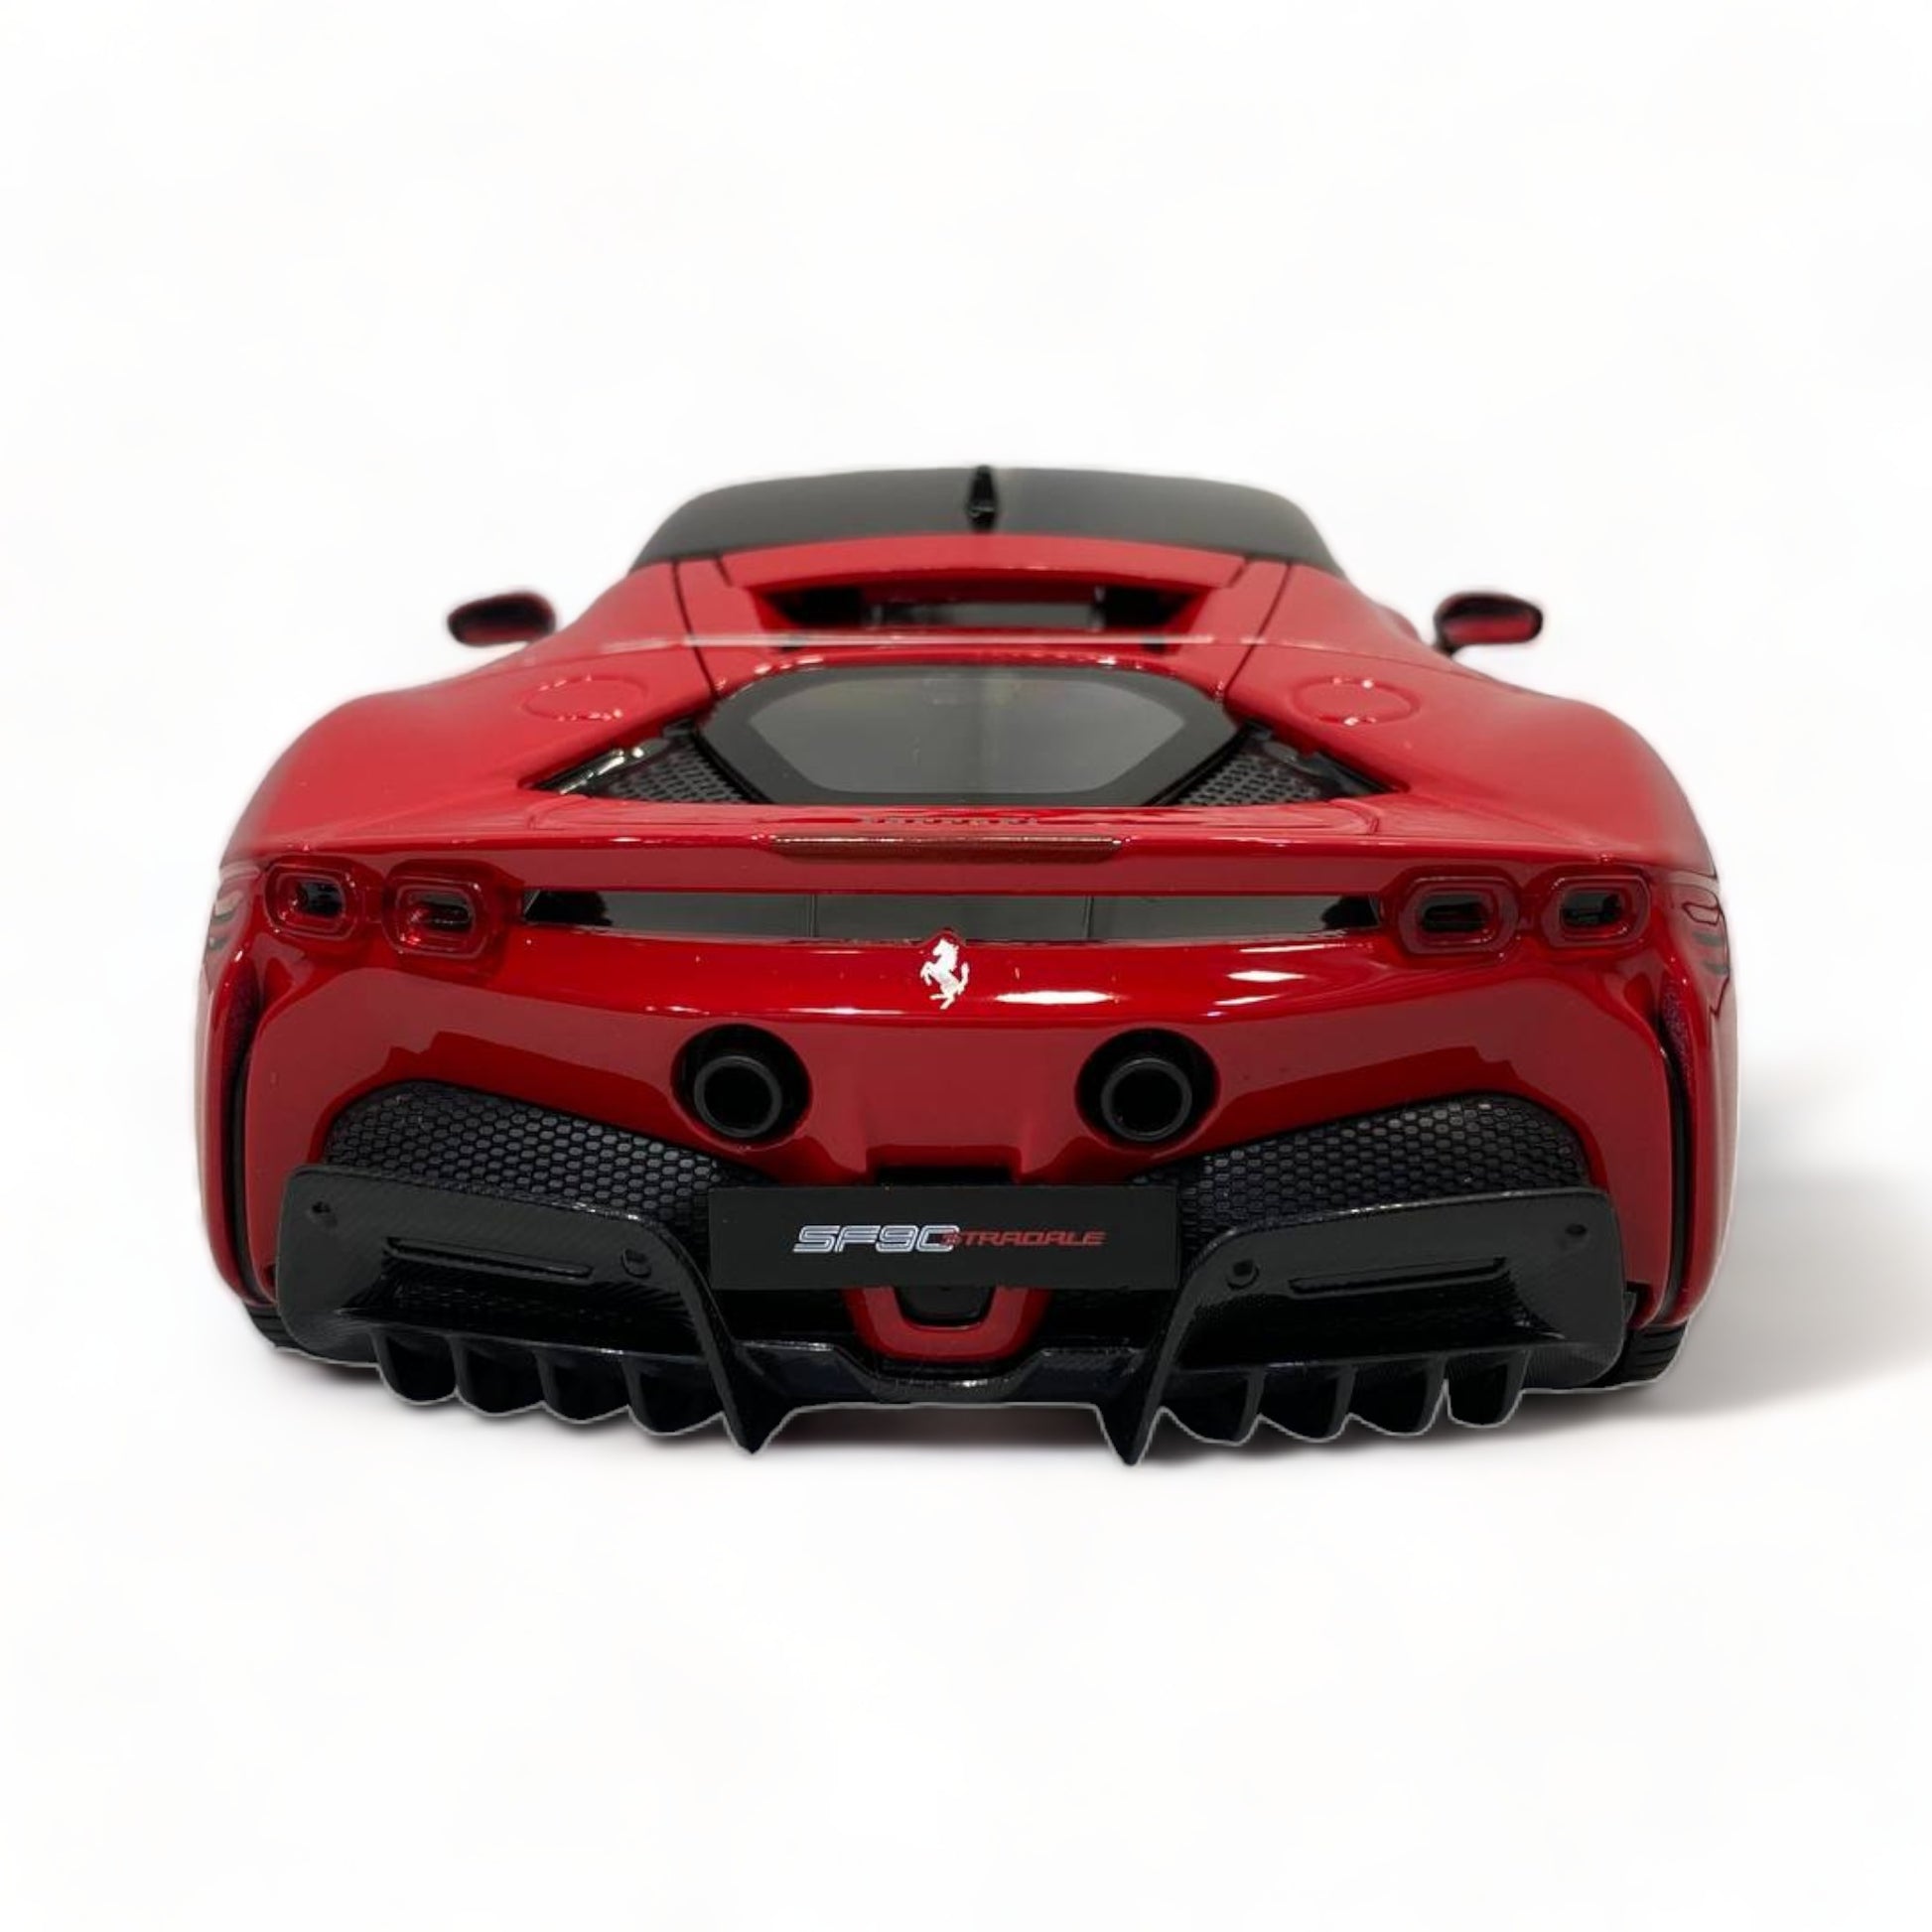 1/18 Diecast Ferrari SF90 Stradale Red Bburago Scale Model Car